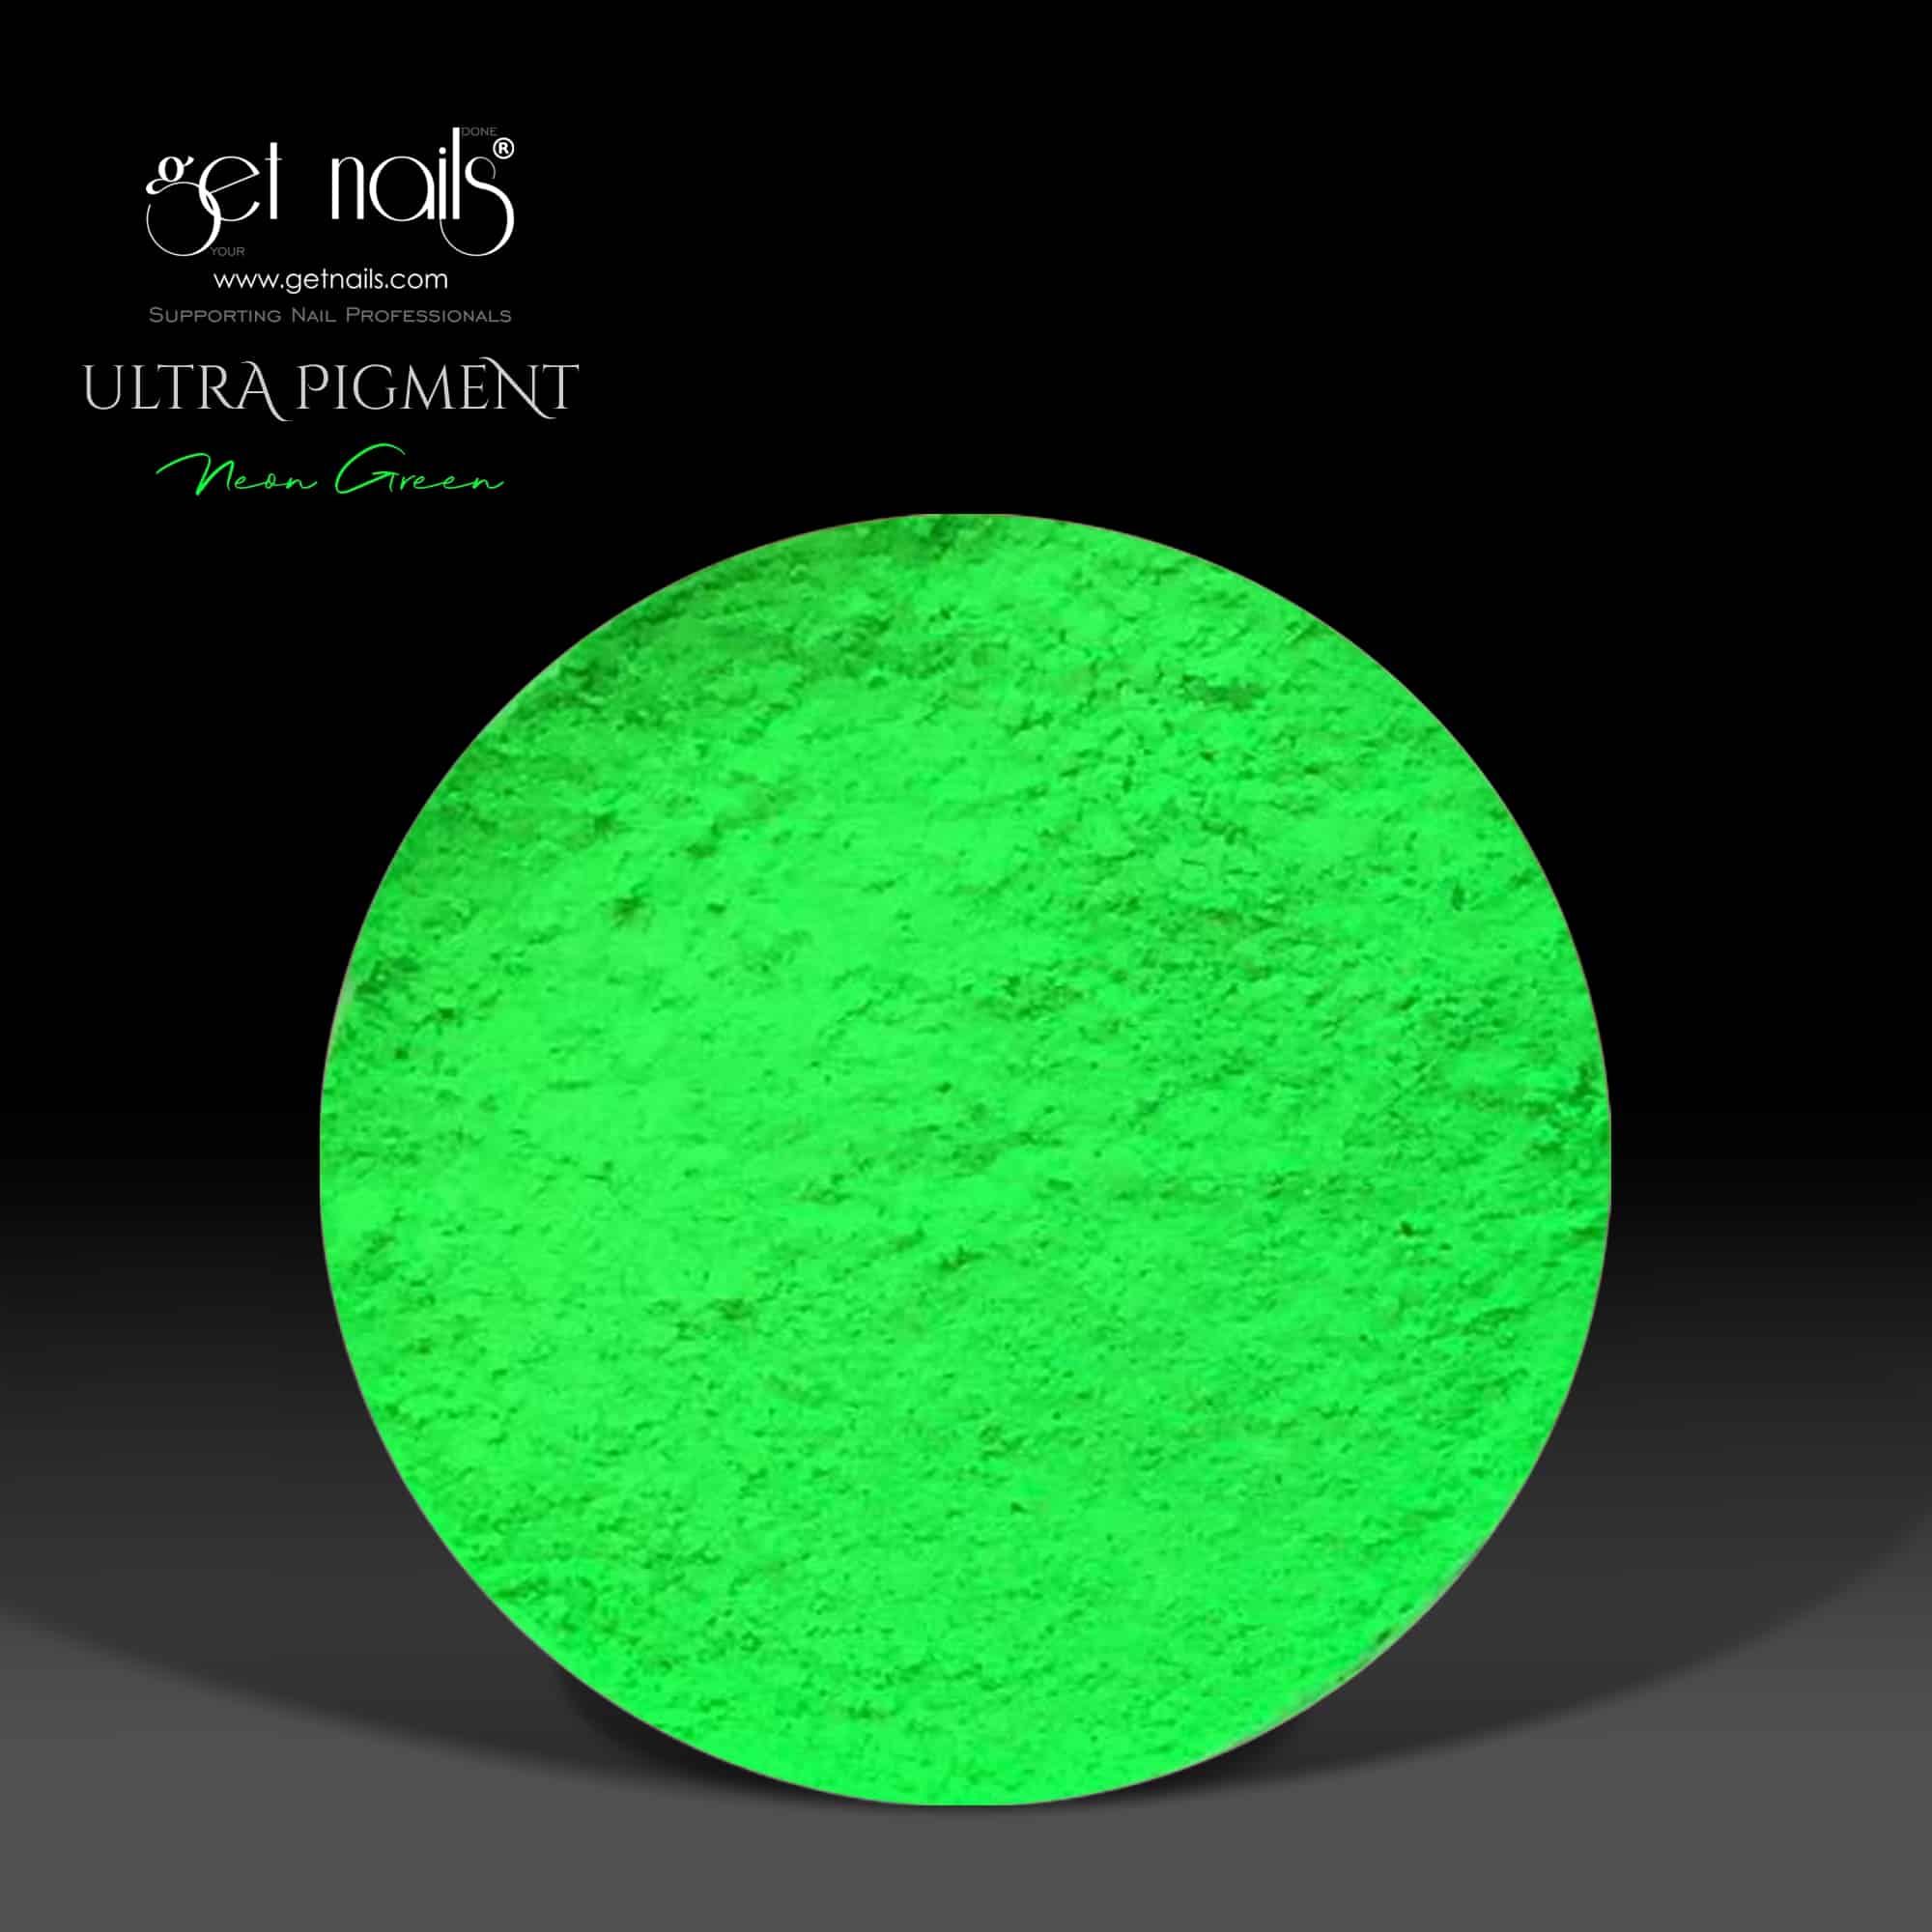 Get Nails Austria - Ultra Pigment Neon Green 1.5g